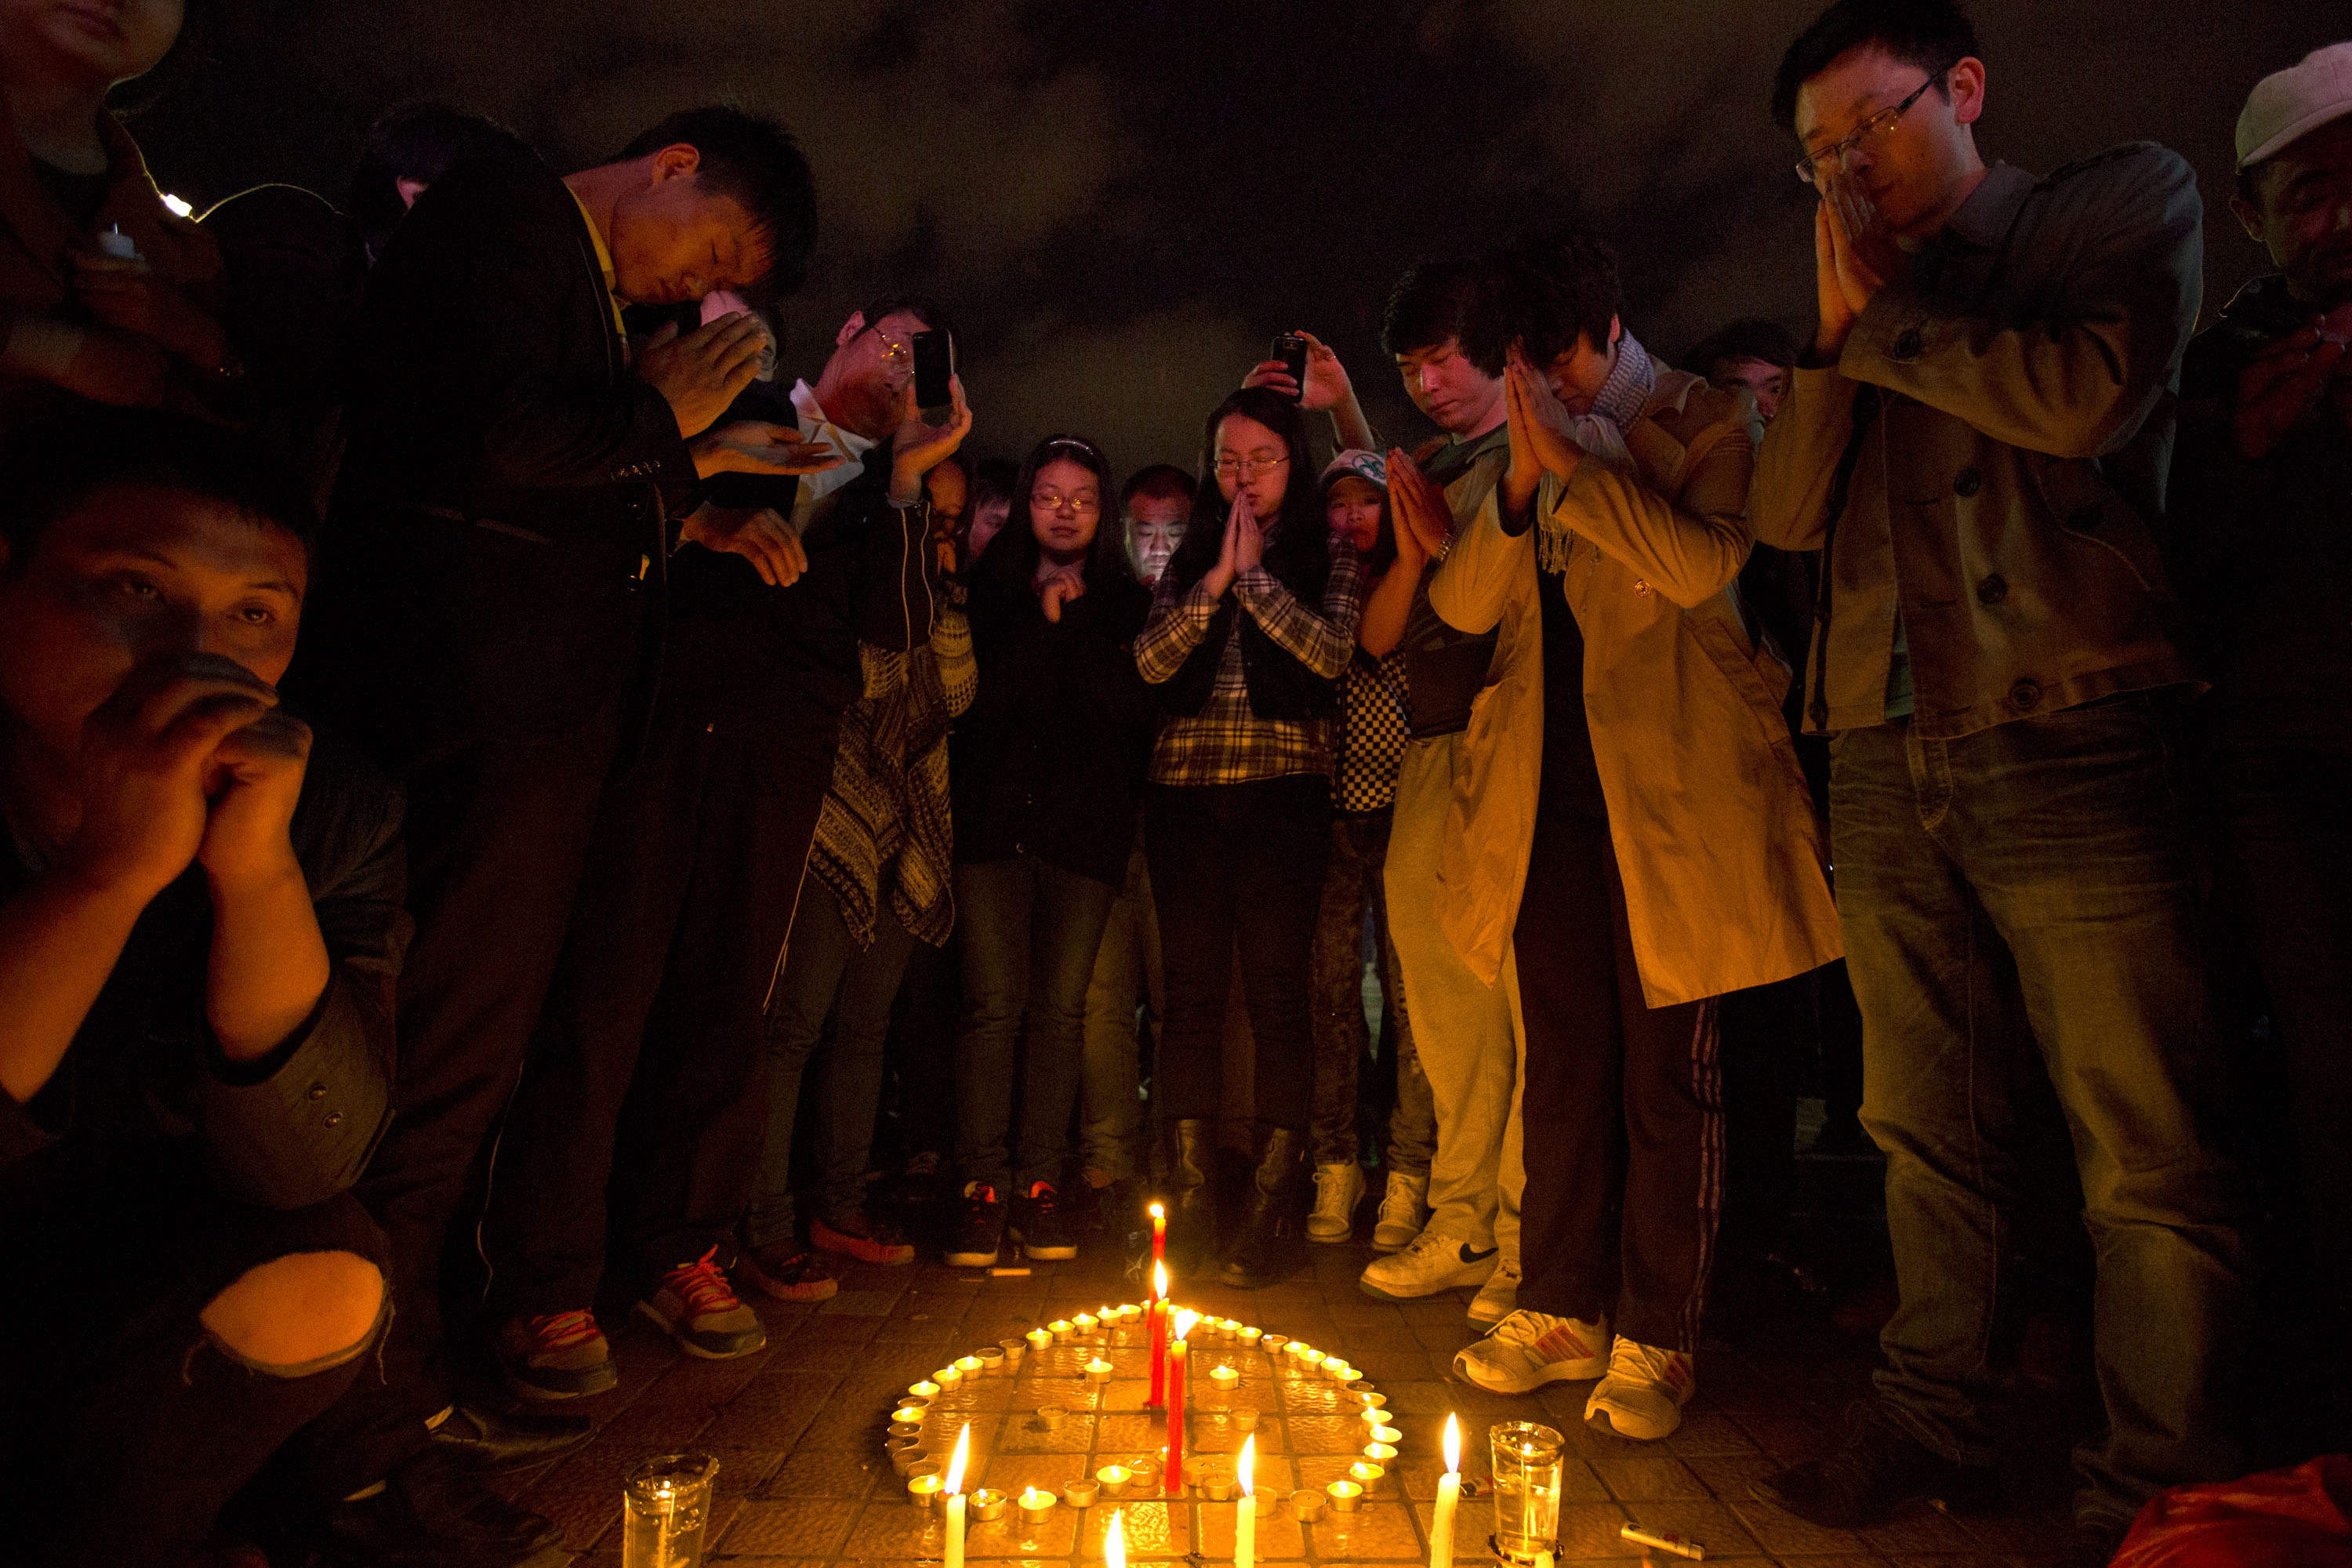 A candlelit vigil is held at Kunming, following the massacre of 29 civilians. Photo: AP